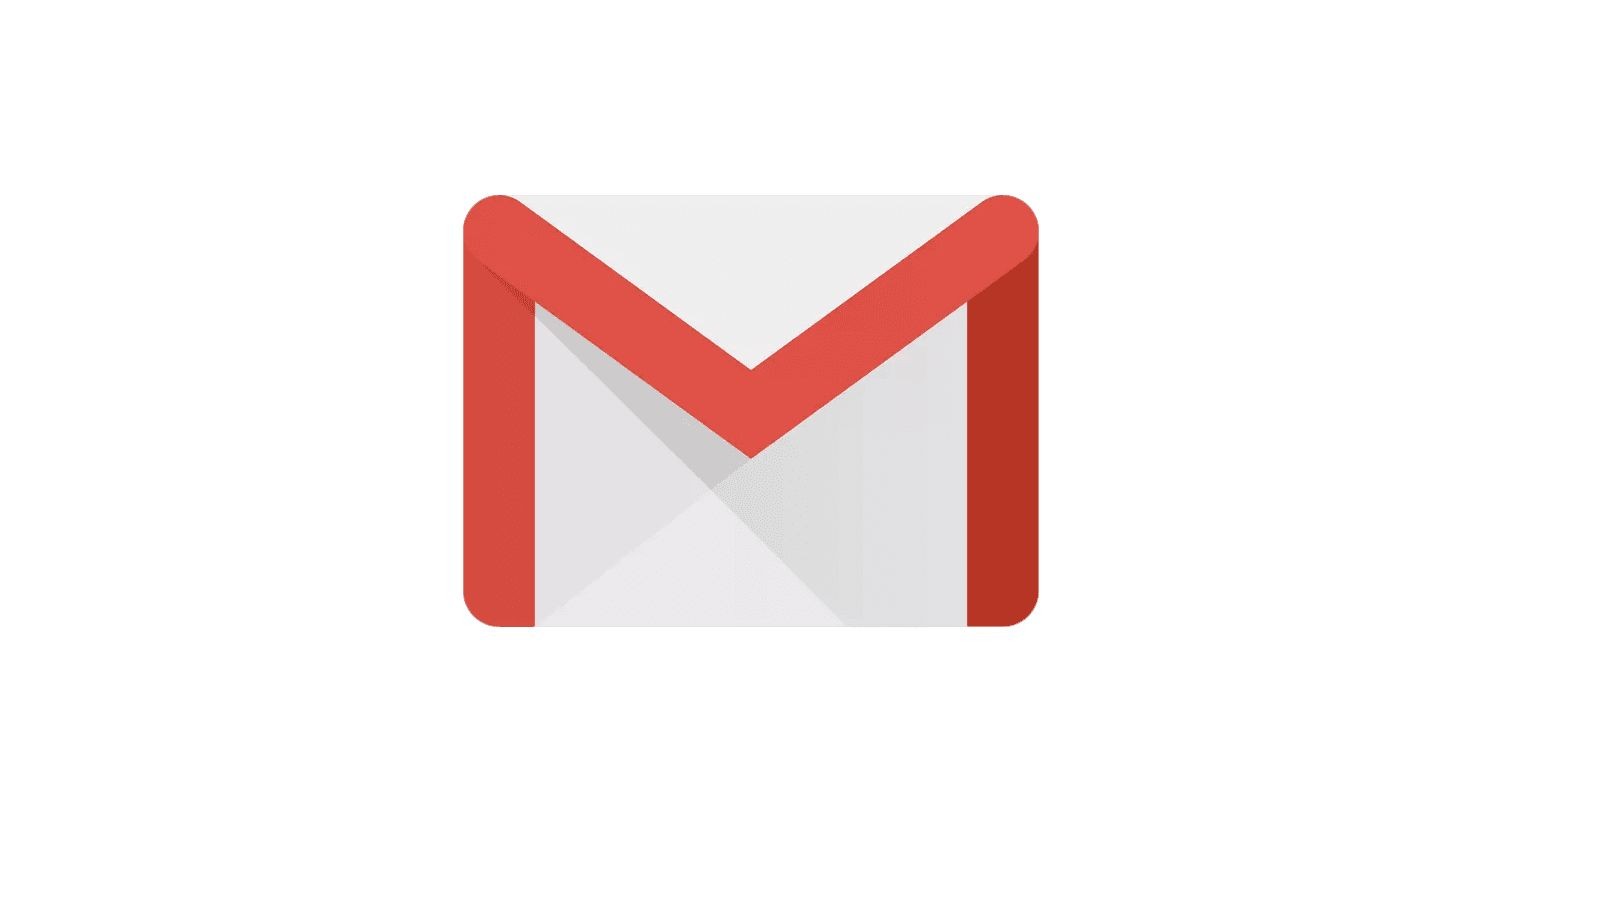 Poczta Gmail